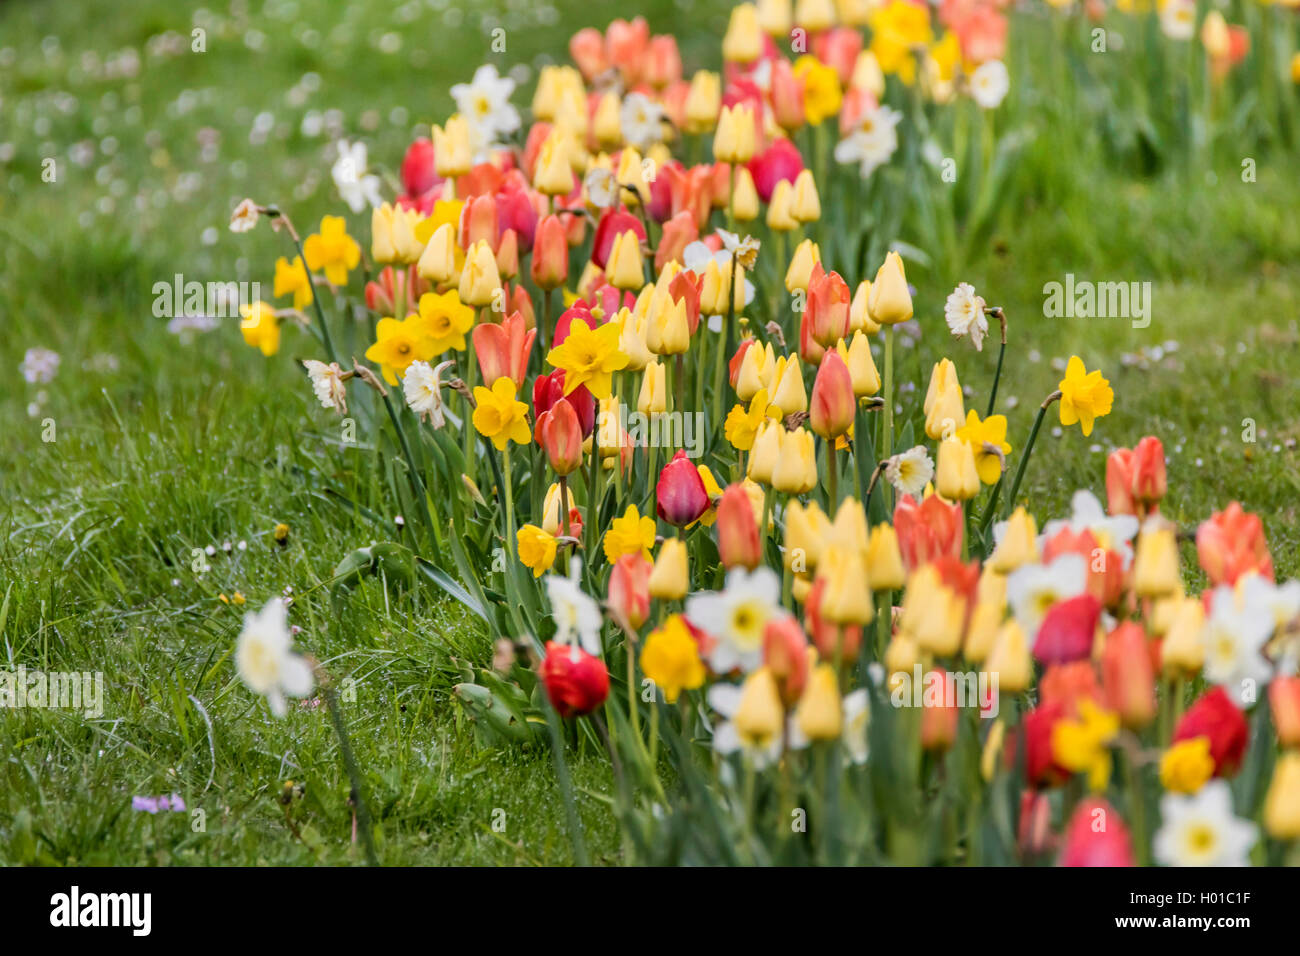 Gartentulpe, Garten-Tulpe, Tulpe (Tulipa gesneriana), Tulpen und Narzissen in einer Wiese, Deutschland | common garden tulip (Tu Stock Photo